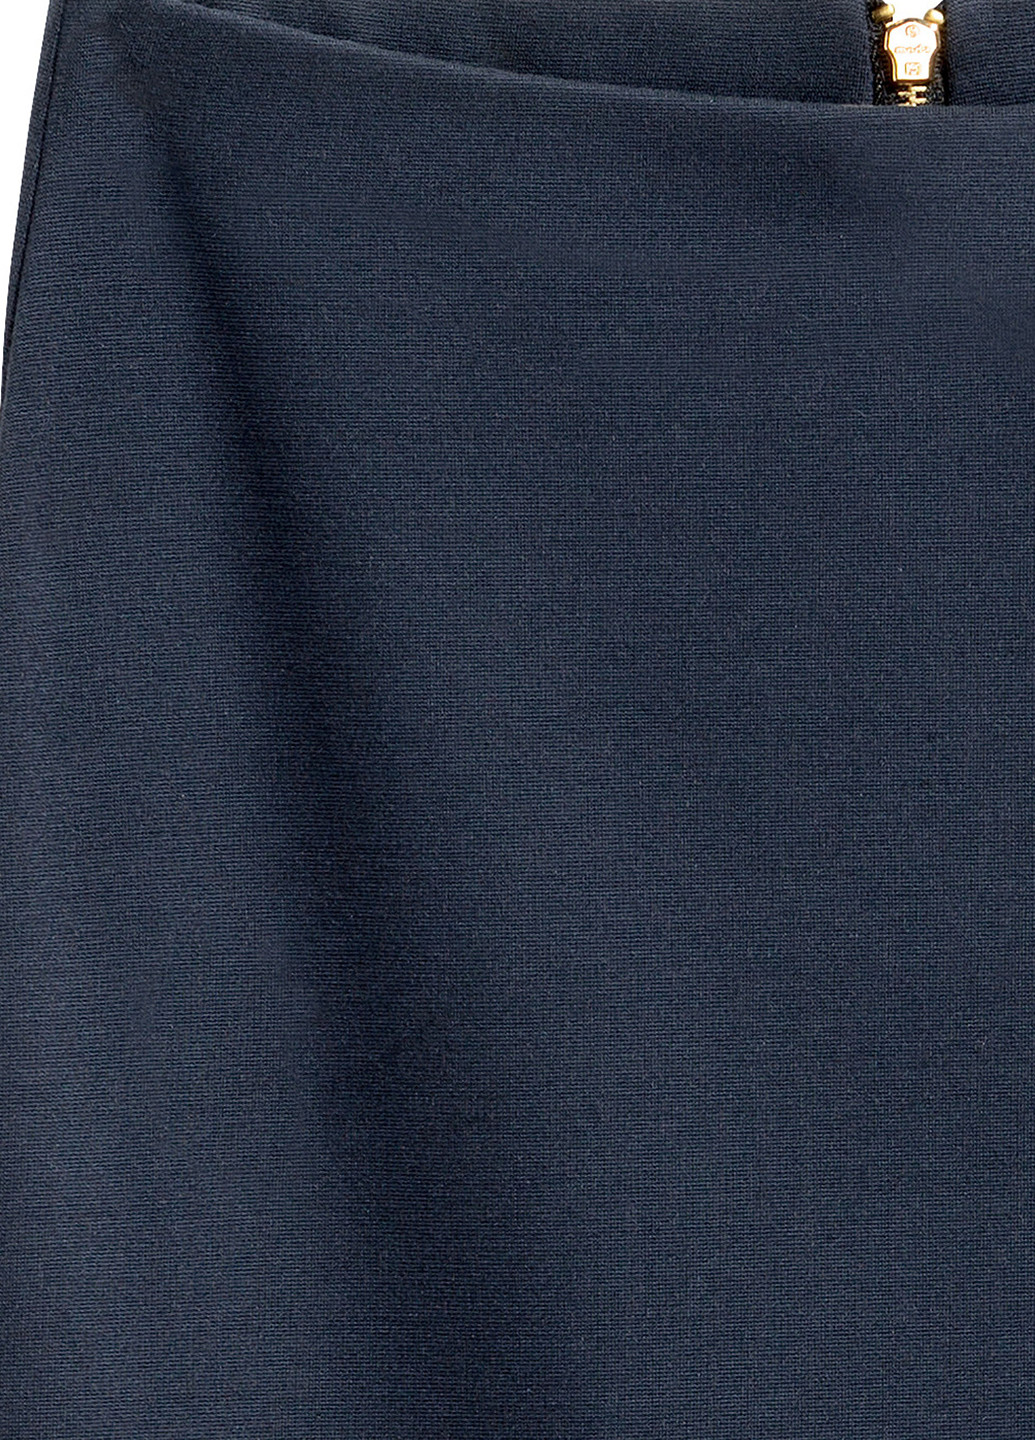 Темно-синяя офисная однотонная юбка H&M карандаш